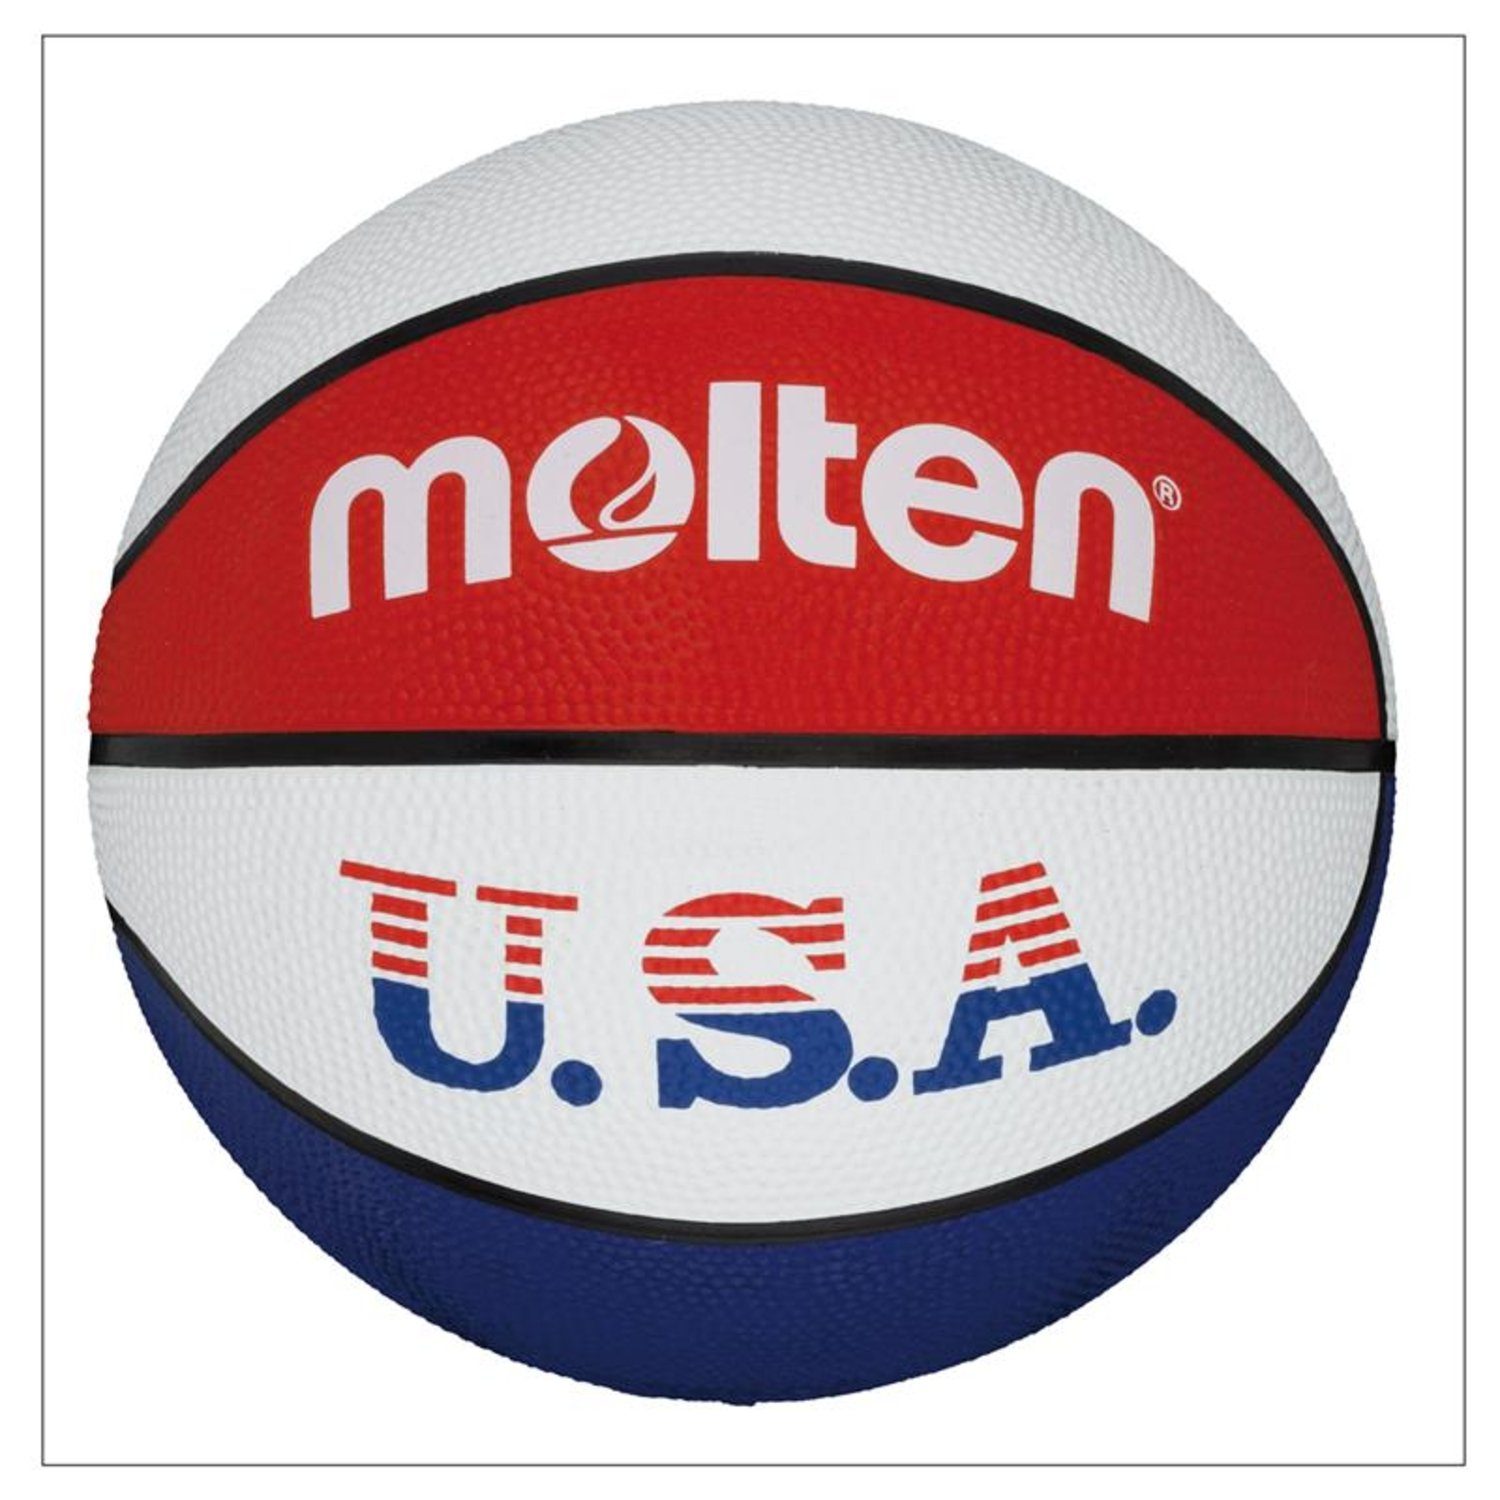 BC7R-USA Molten Basketballkorb Gr. USA, Trainingsball 7